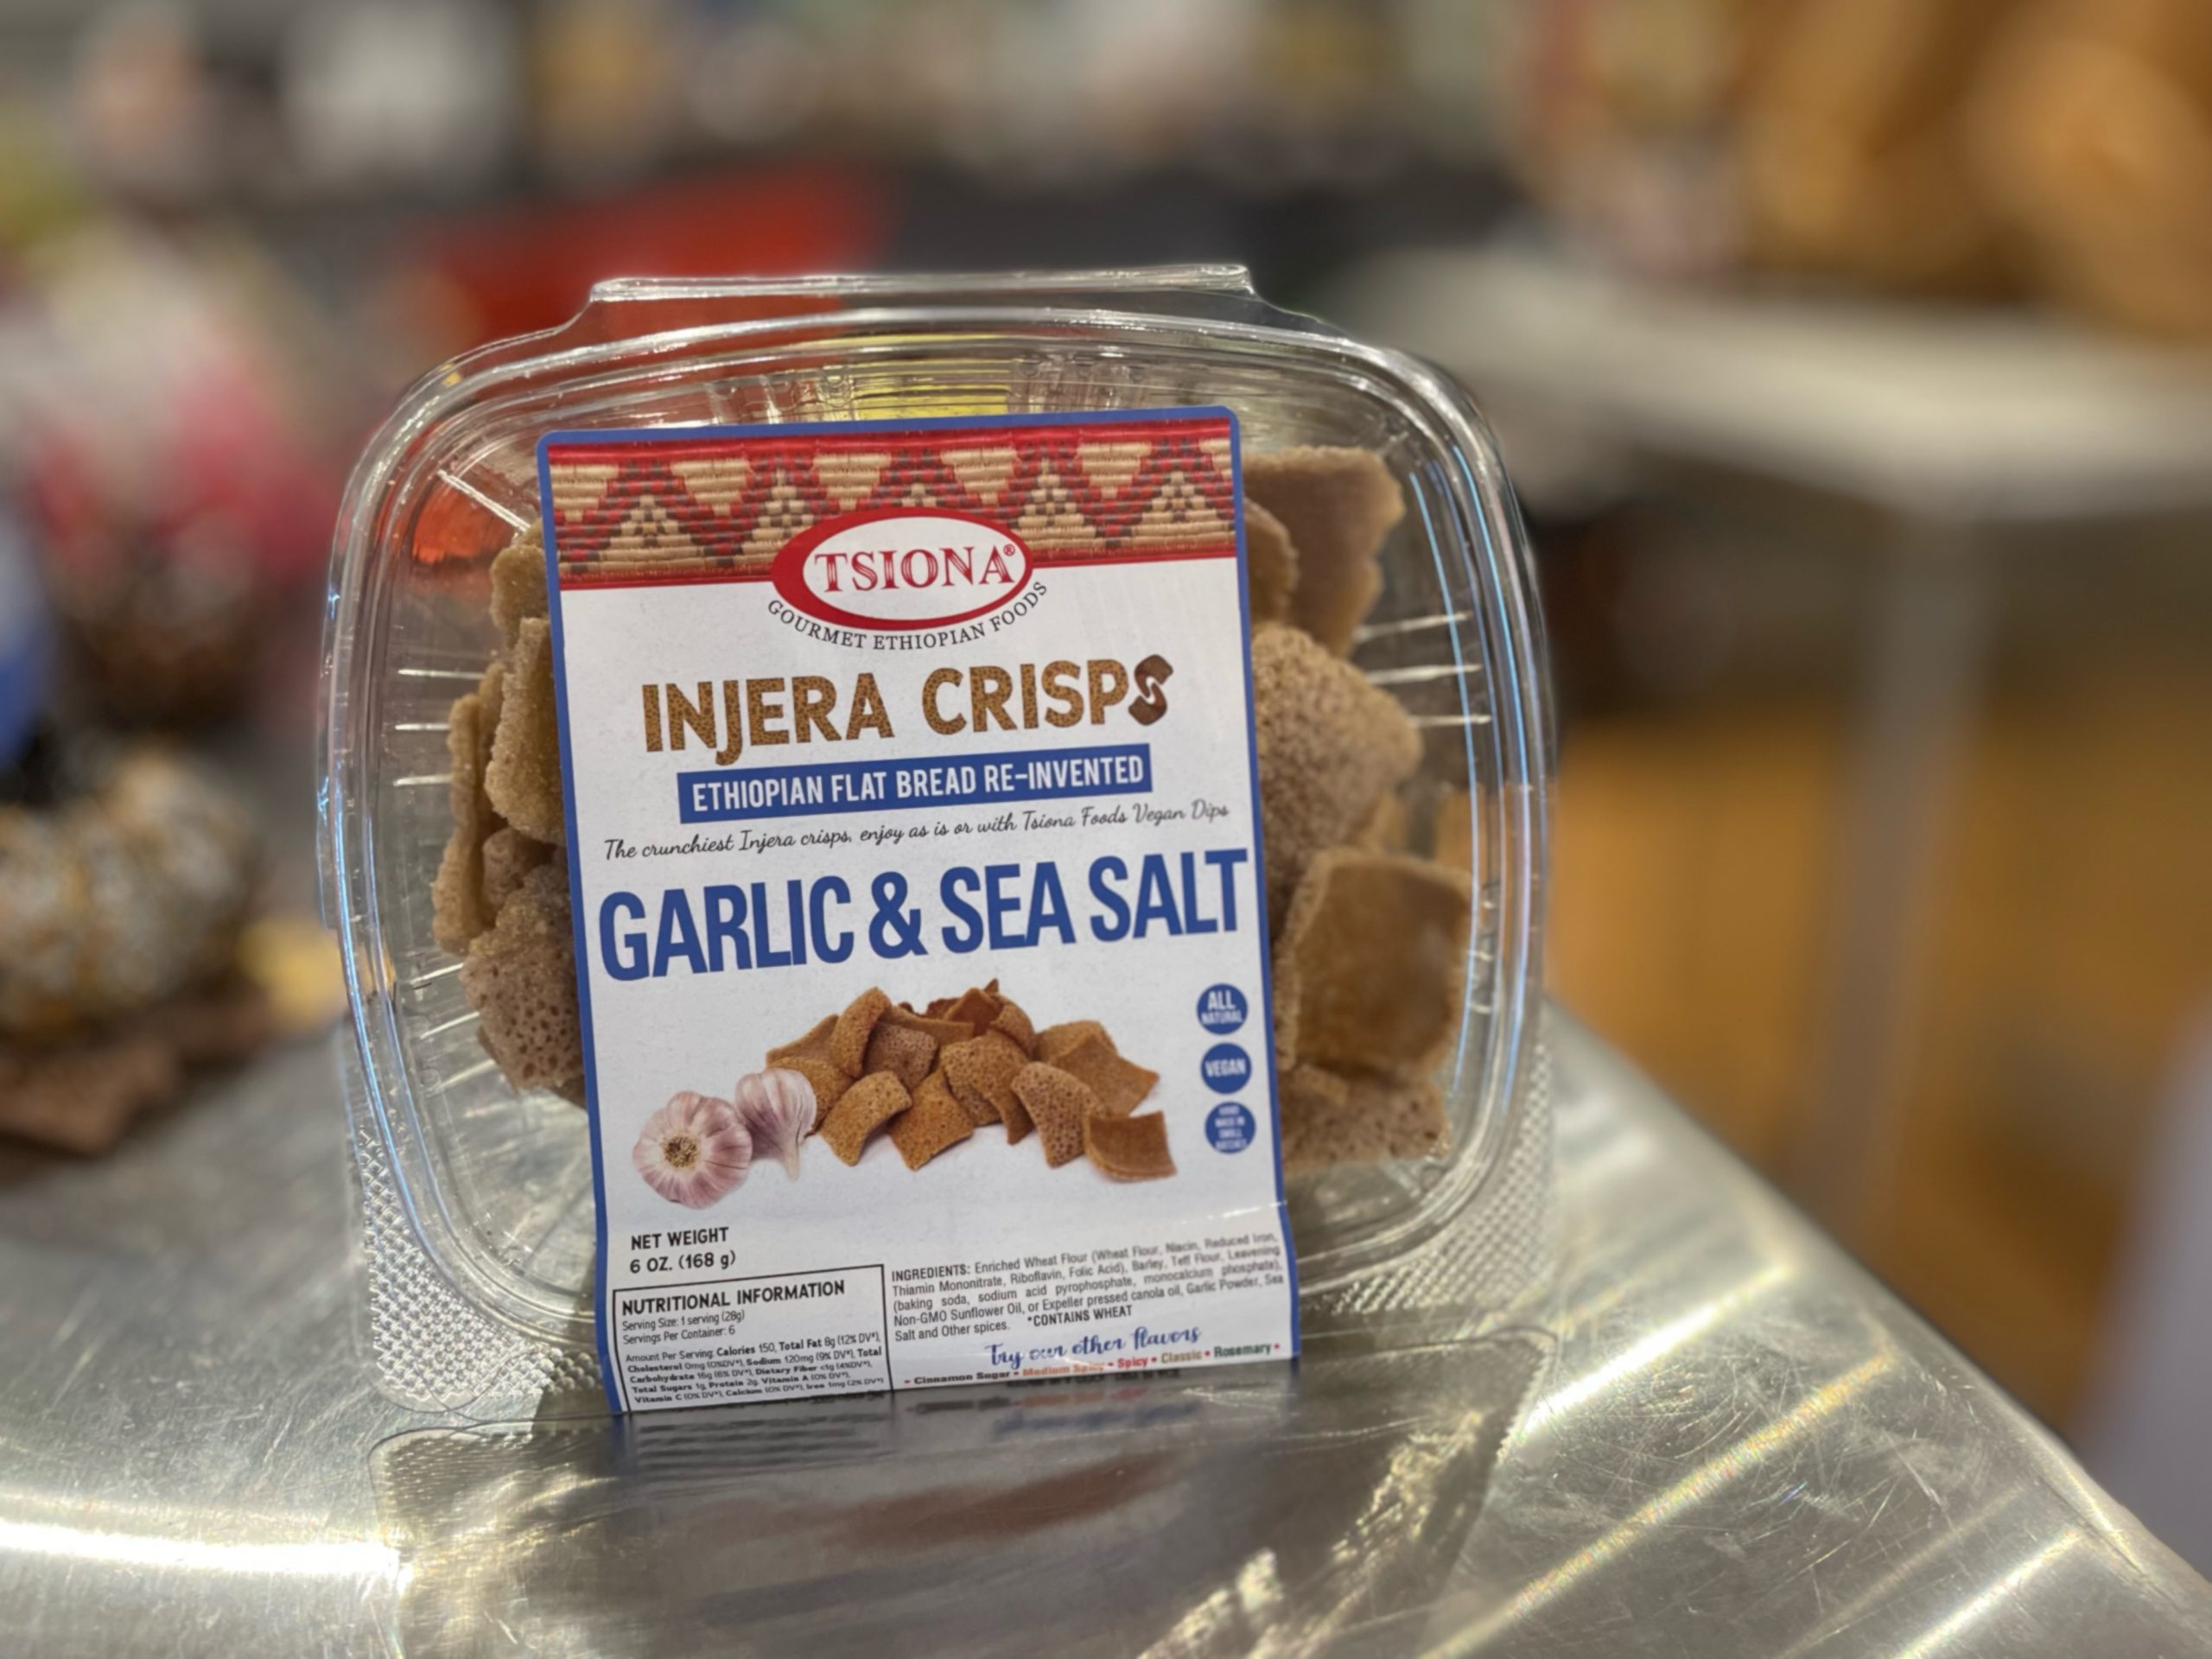 Garlic & Sea Salt Injera Crisps